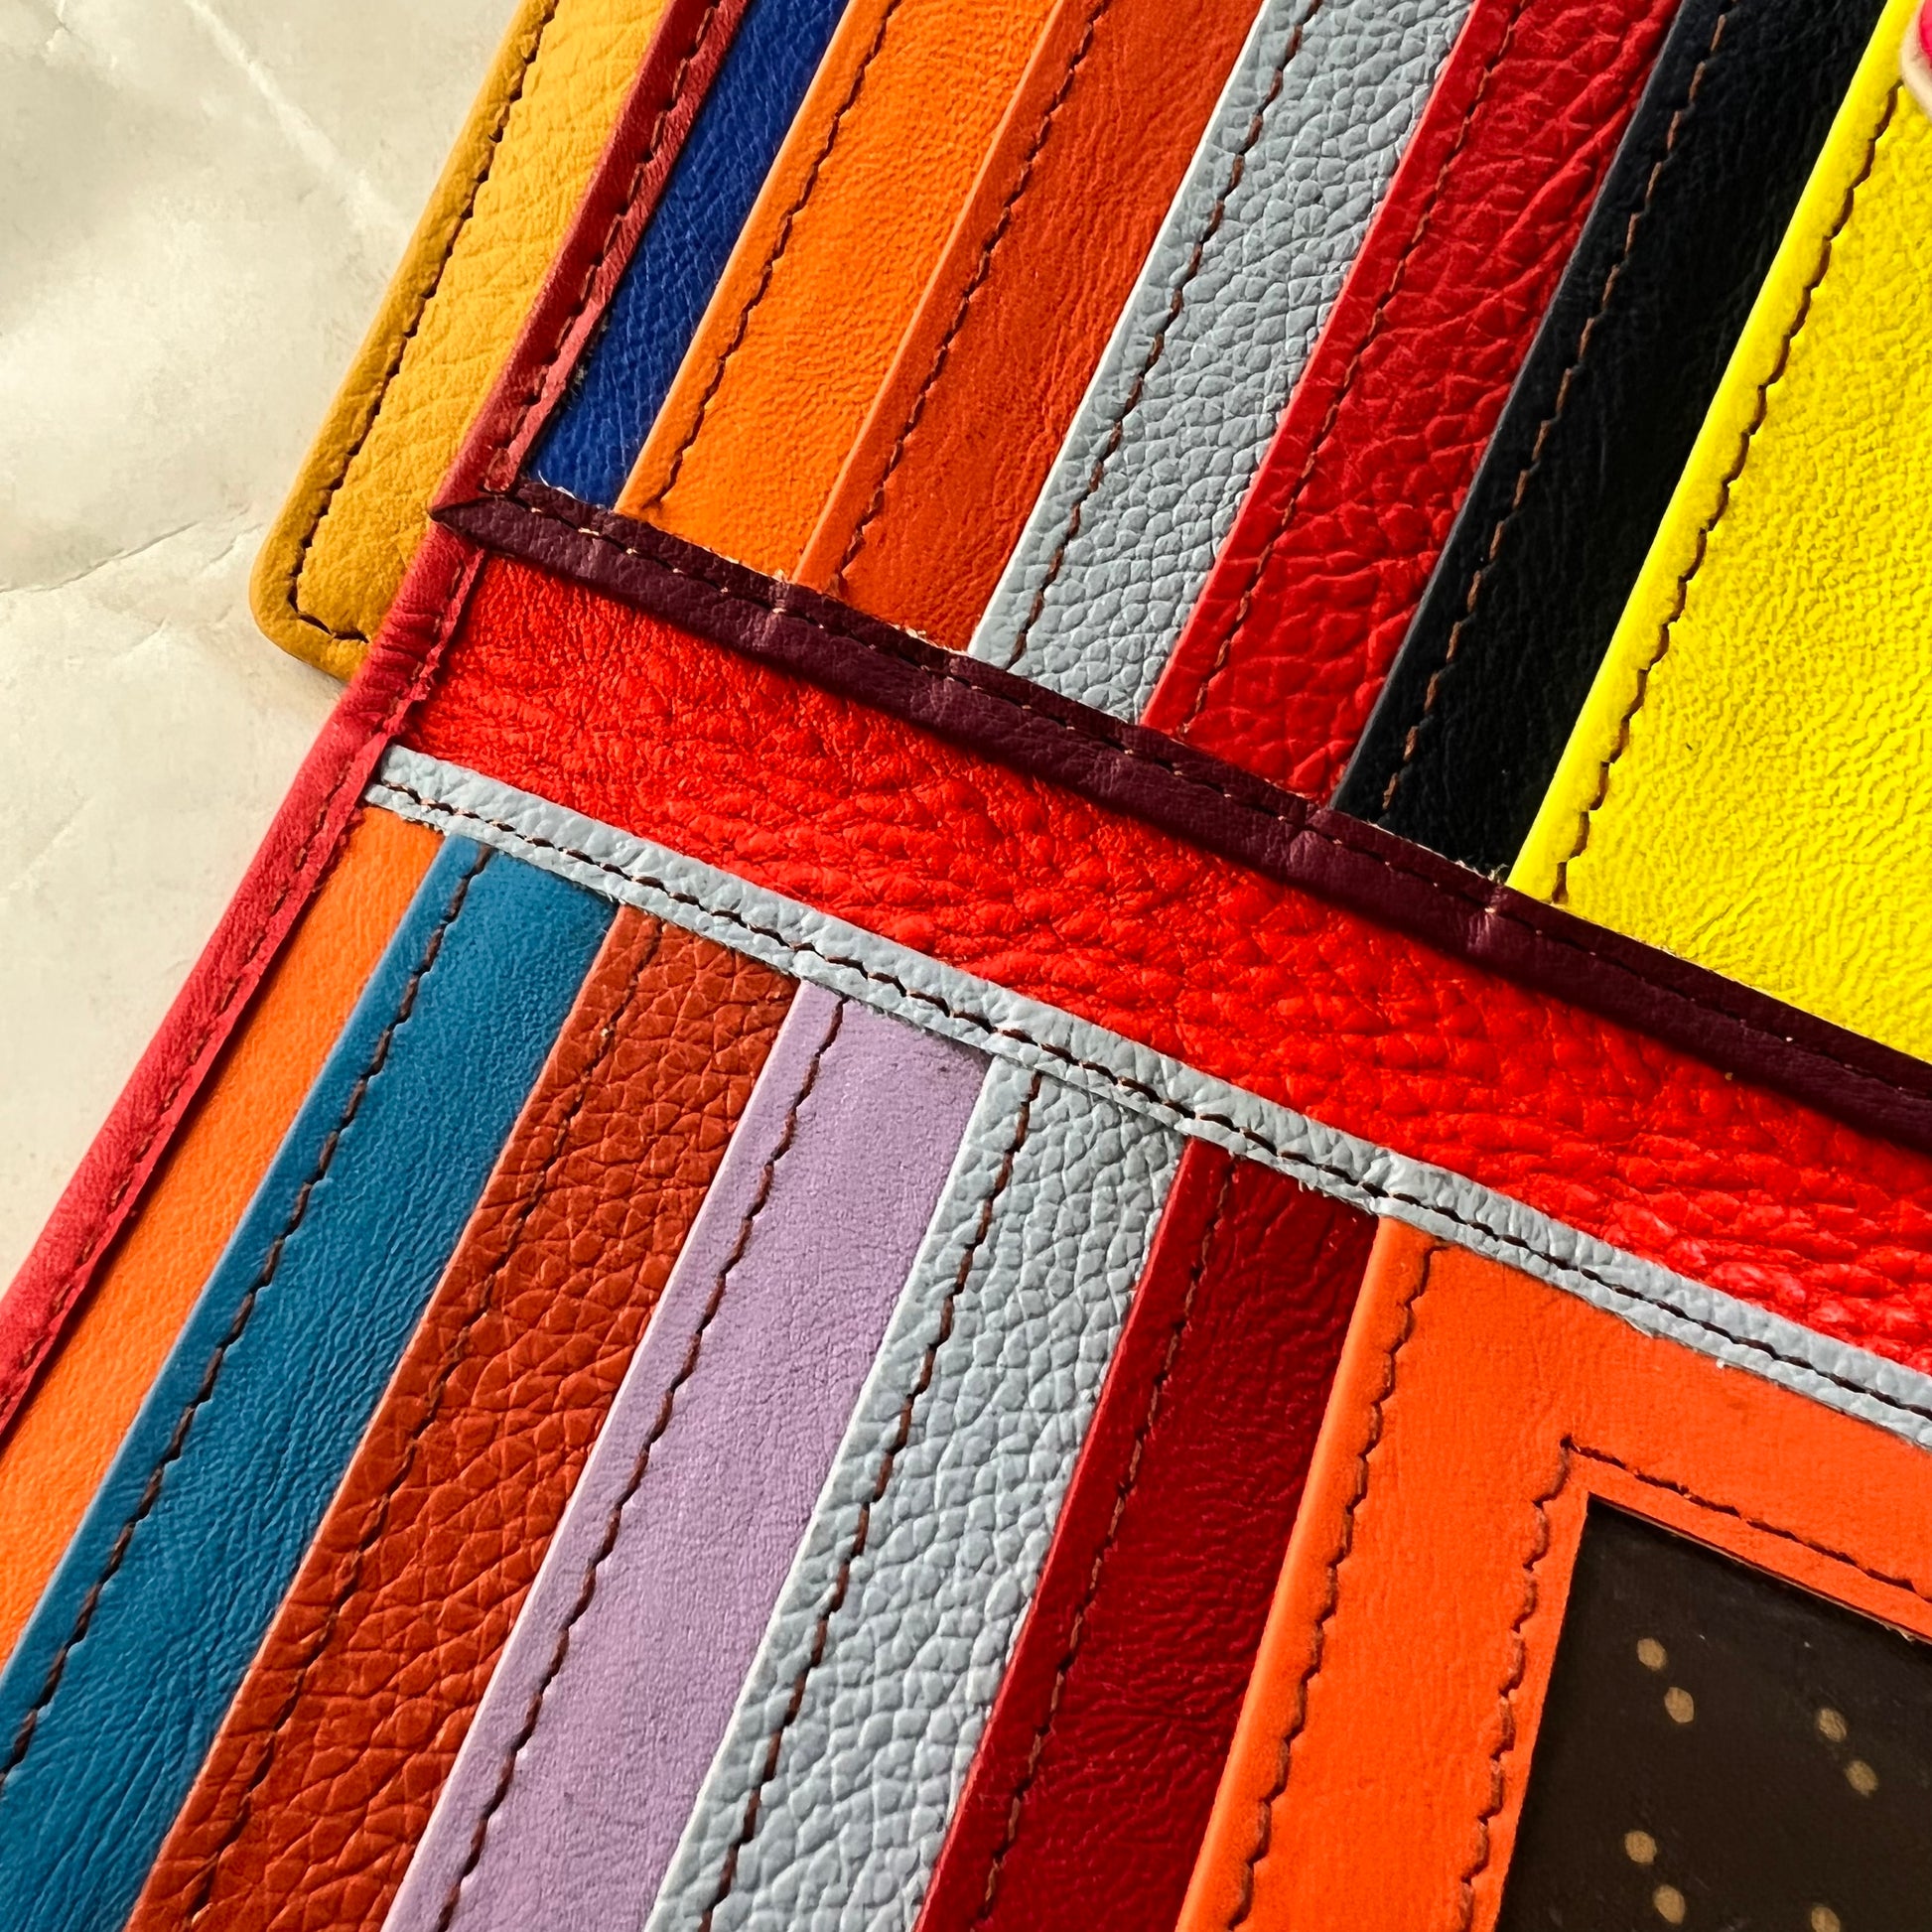 close-up of kimber's colorful card slots.